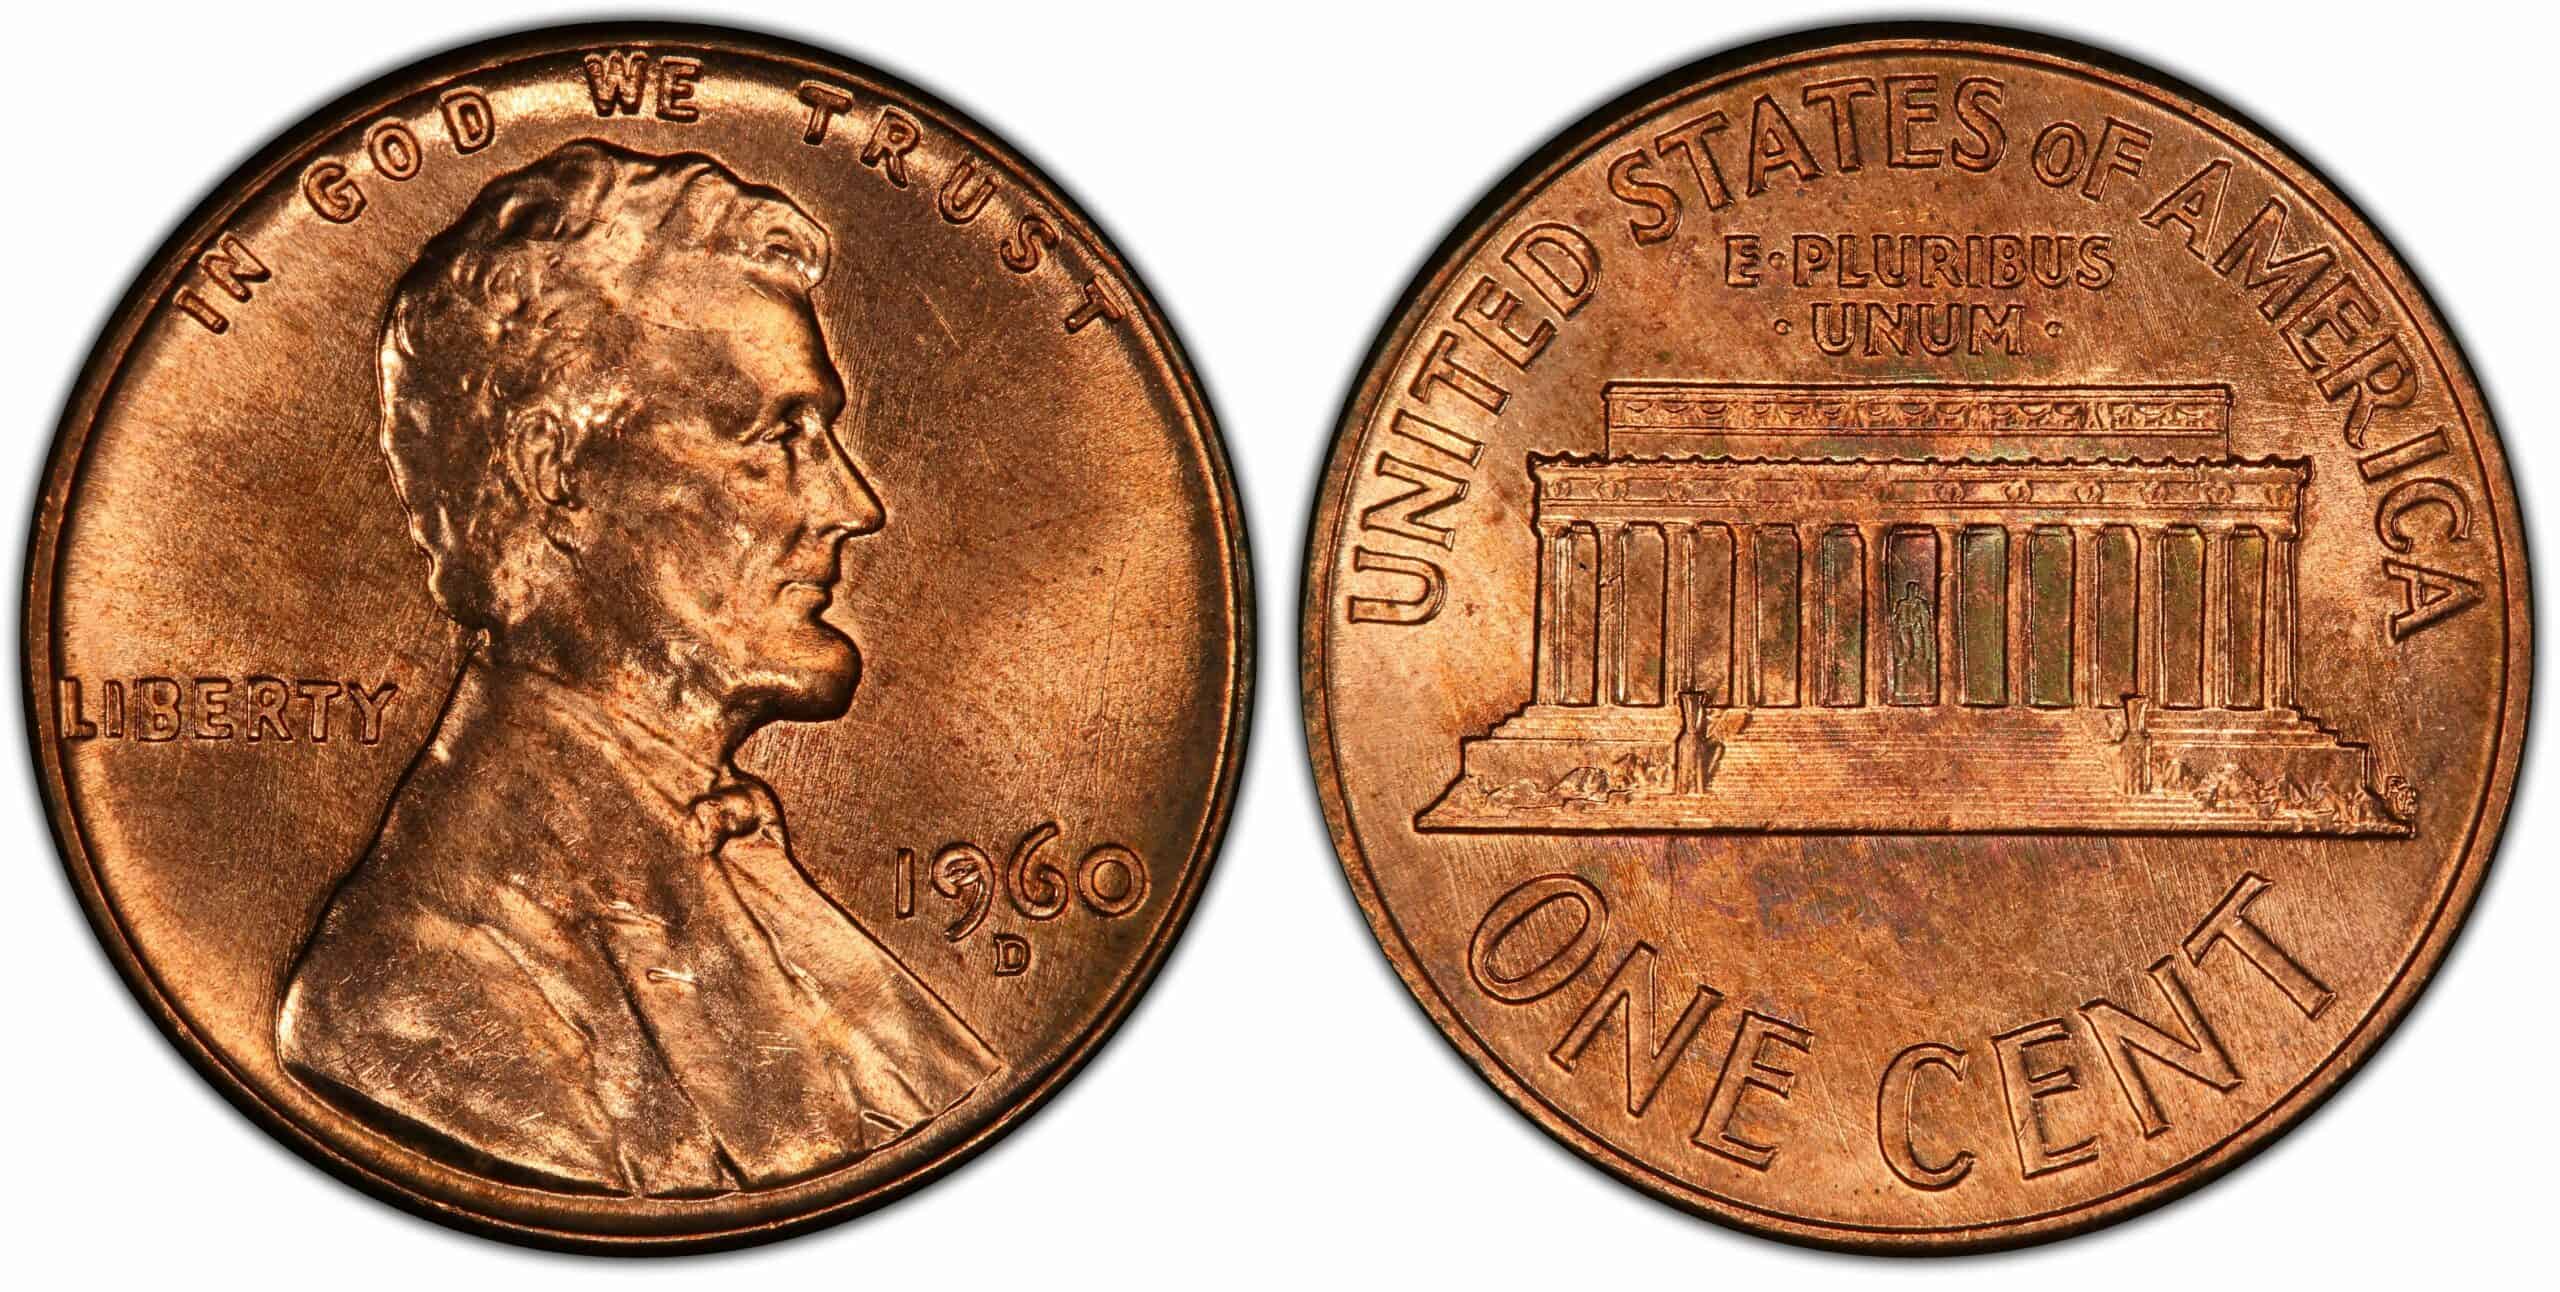 1960 Penny Value Details